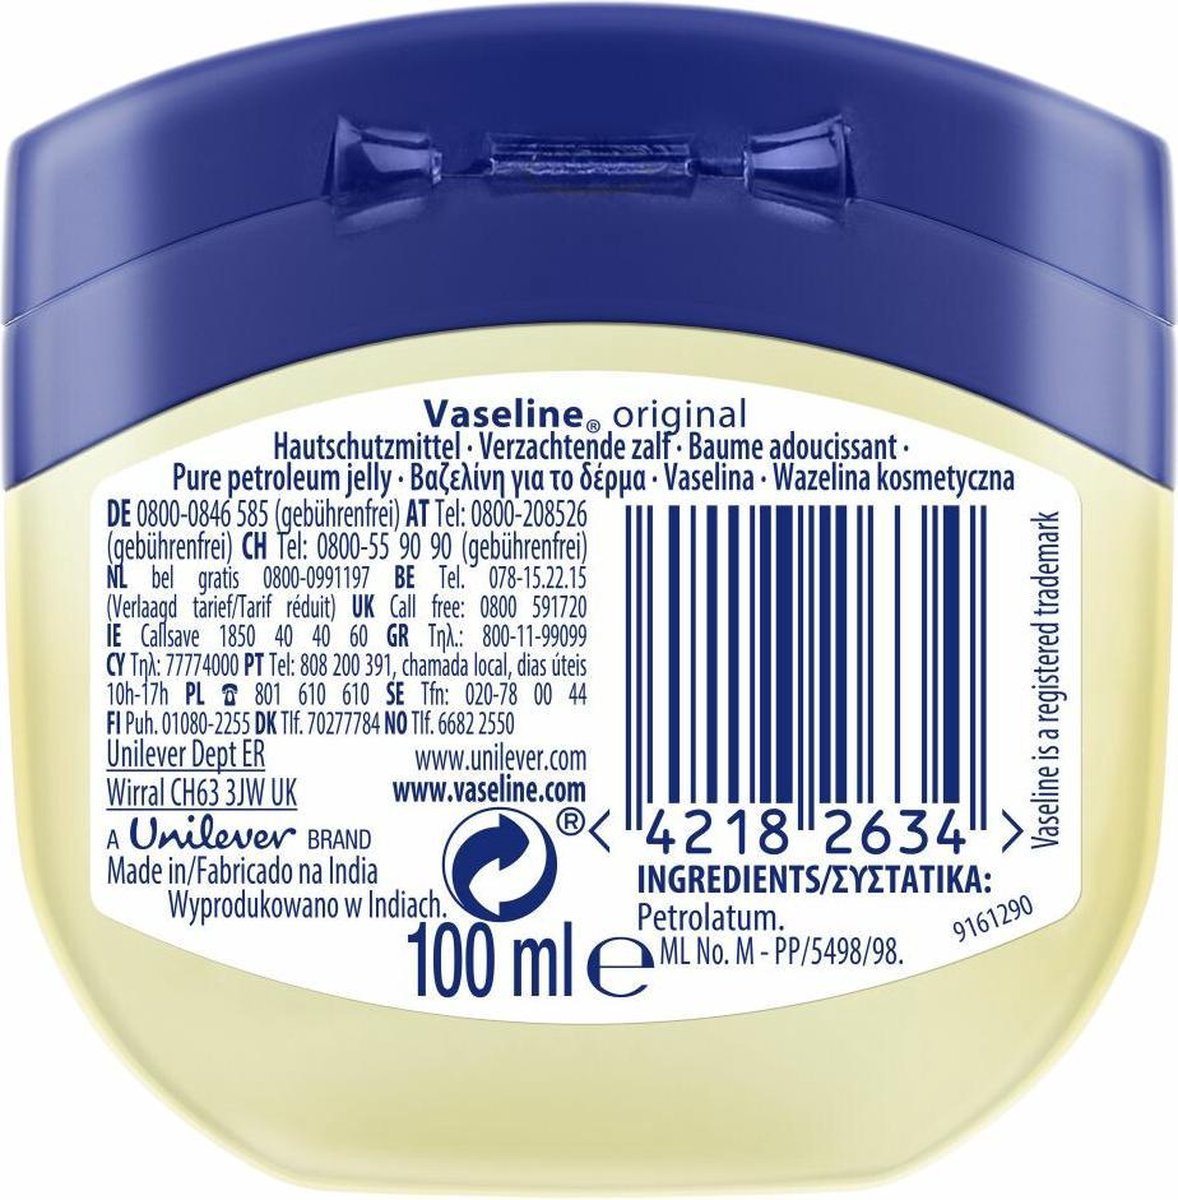 Vaseline Original Creme Petroleum Jelly Bodygel 100ml Achter